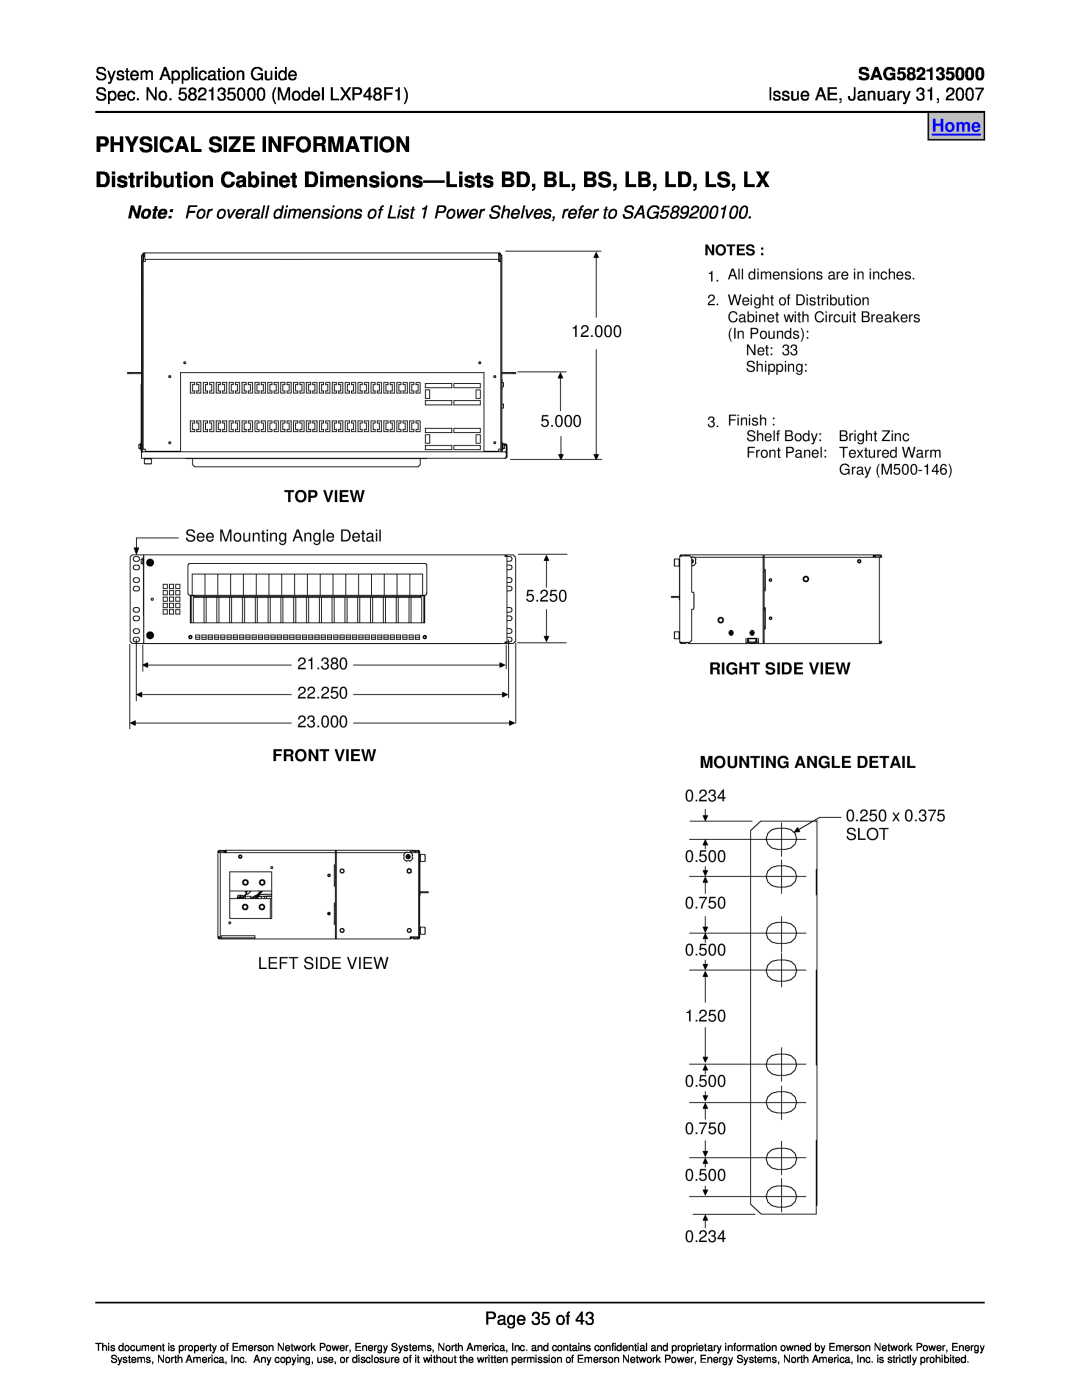 Emerson LXP48F1 Physical Size Information, Distribution Cabinet Dimensions-Lists BD, BL, BS, LB, LD, LS, LX, SAG582135000 